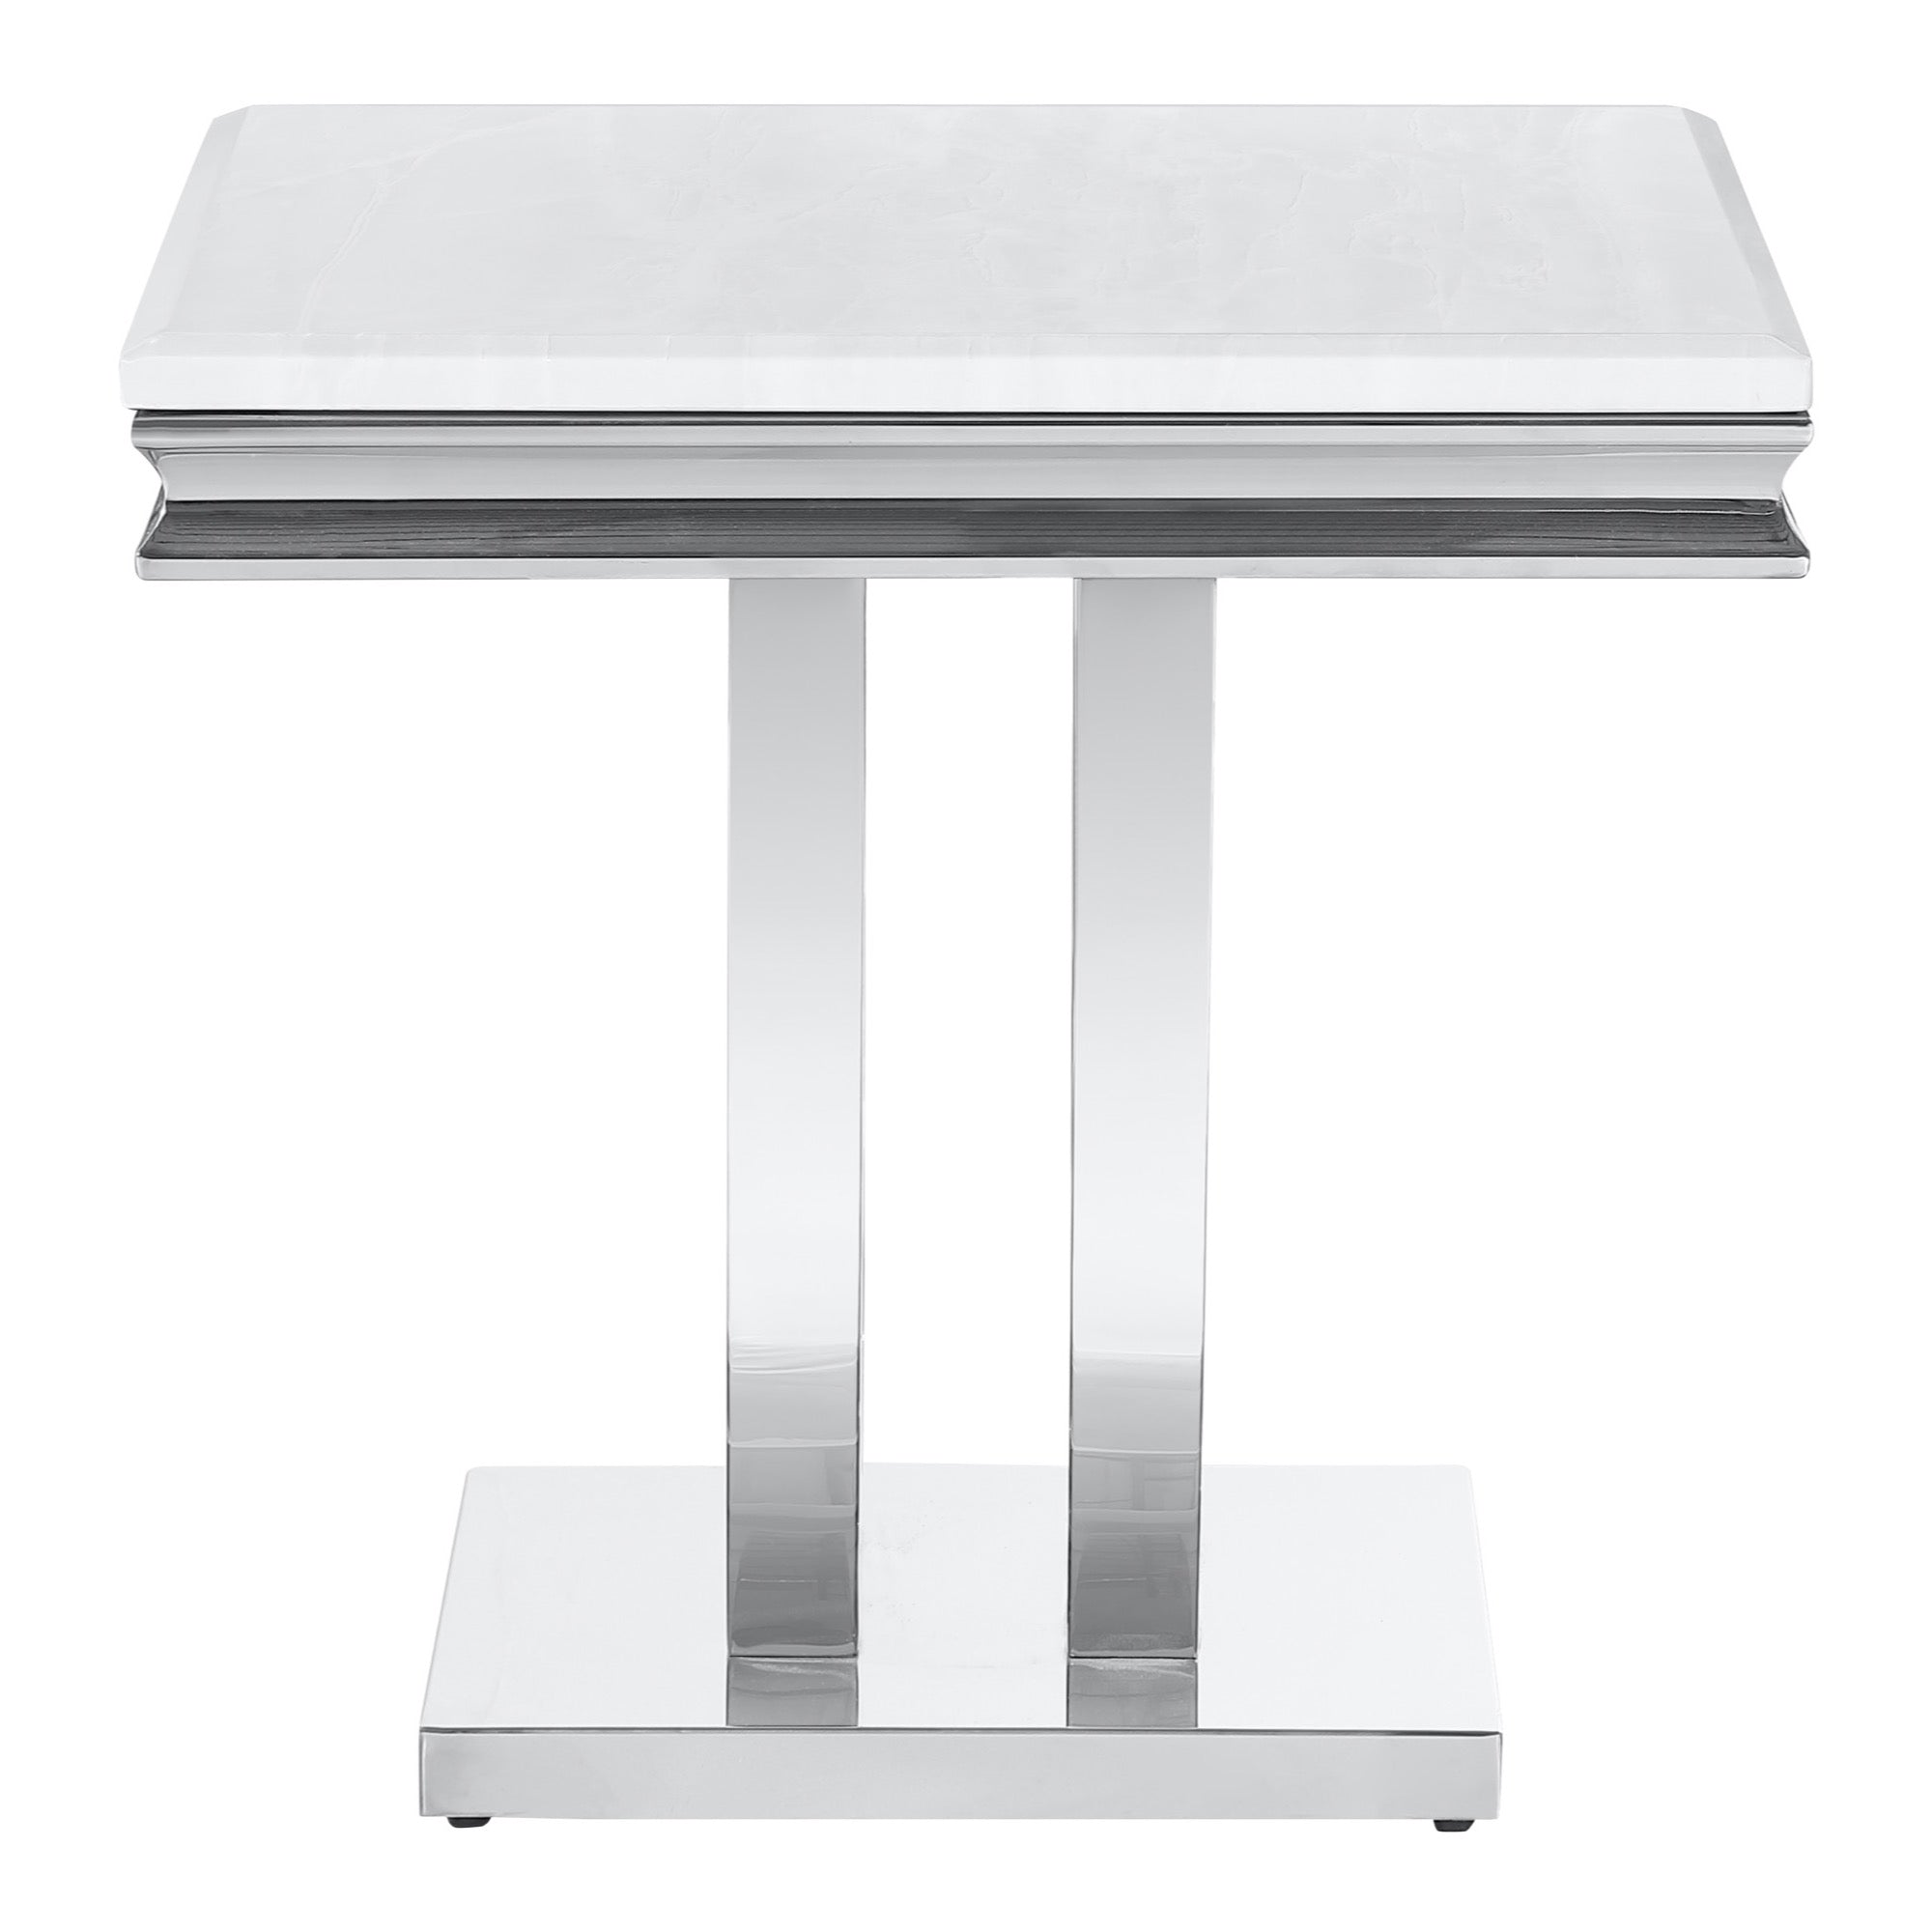 Adabella U-base Square End Table White and Chrome